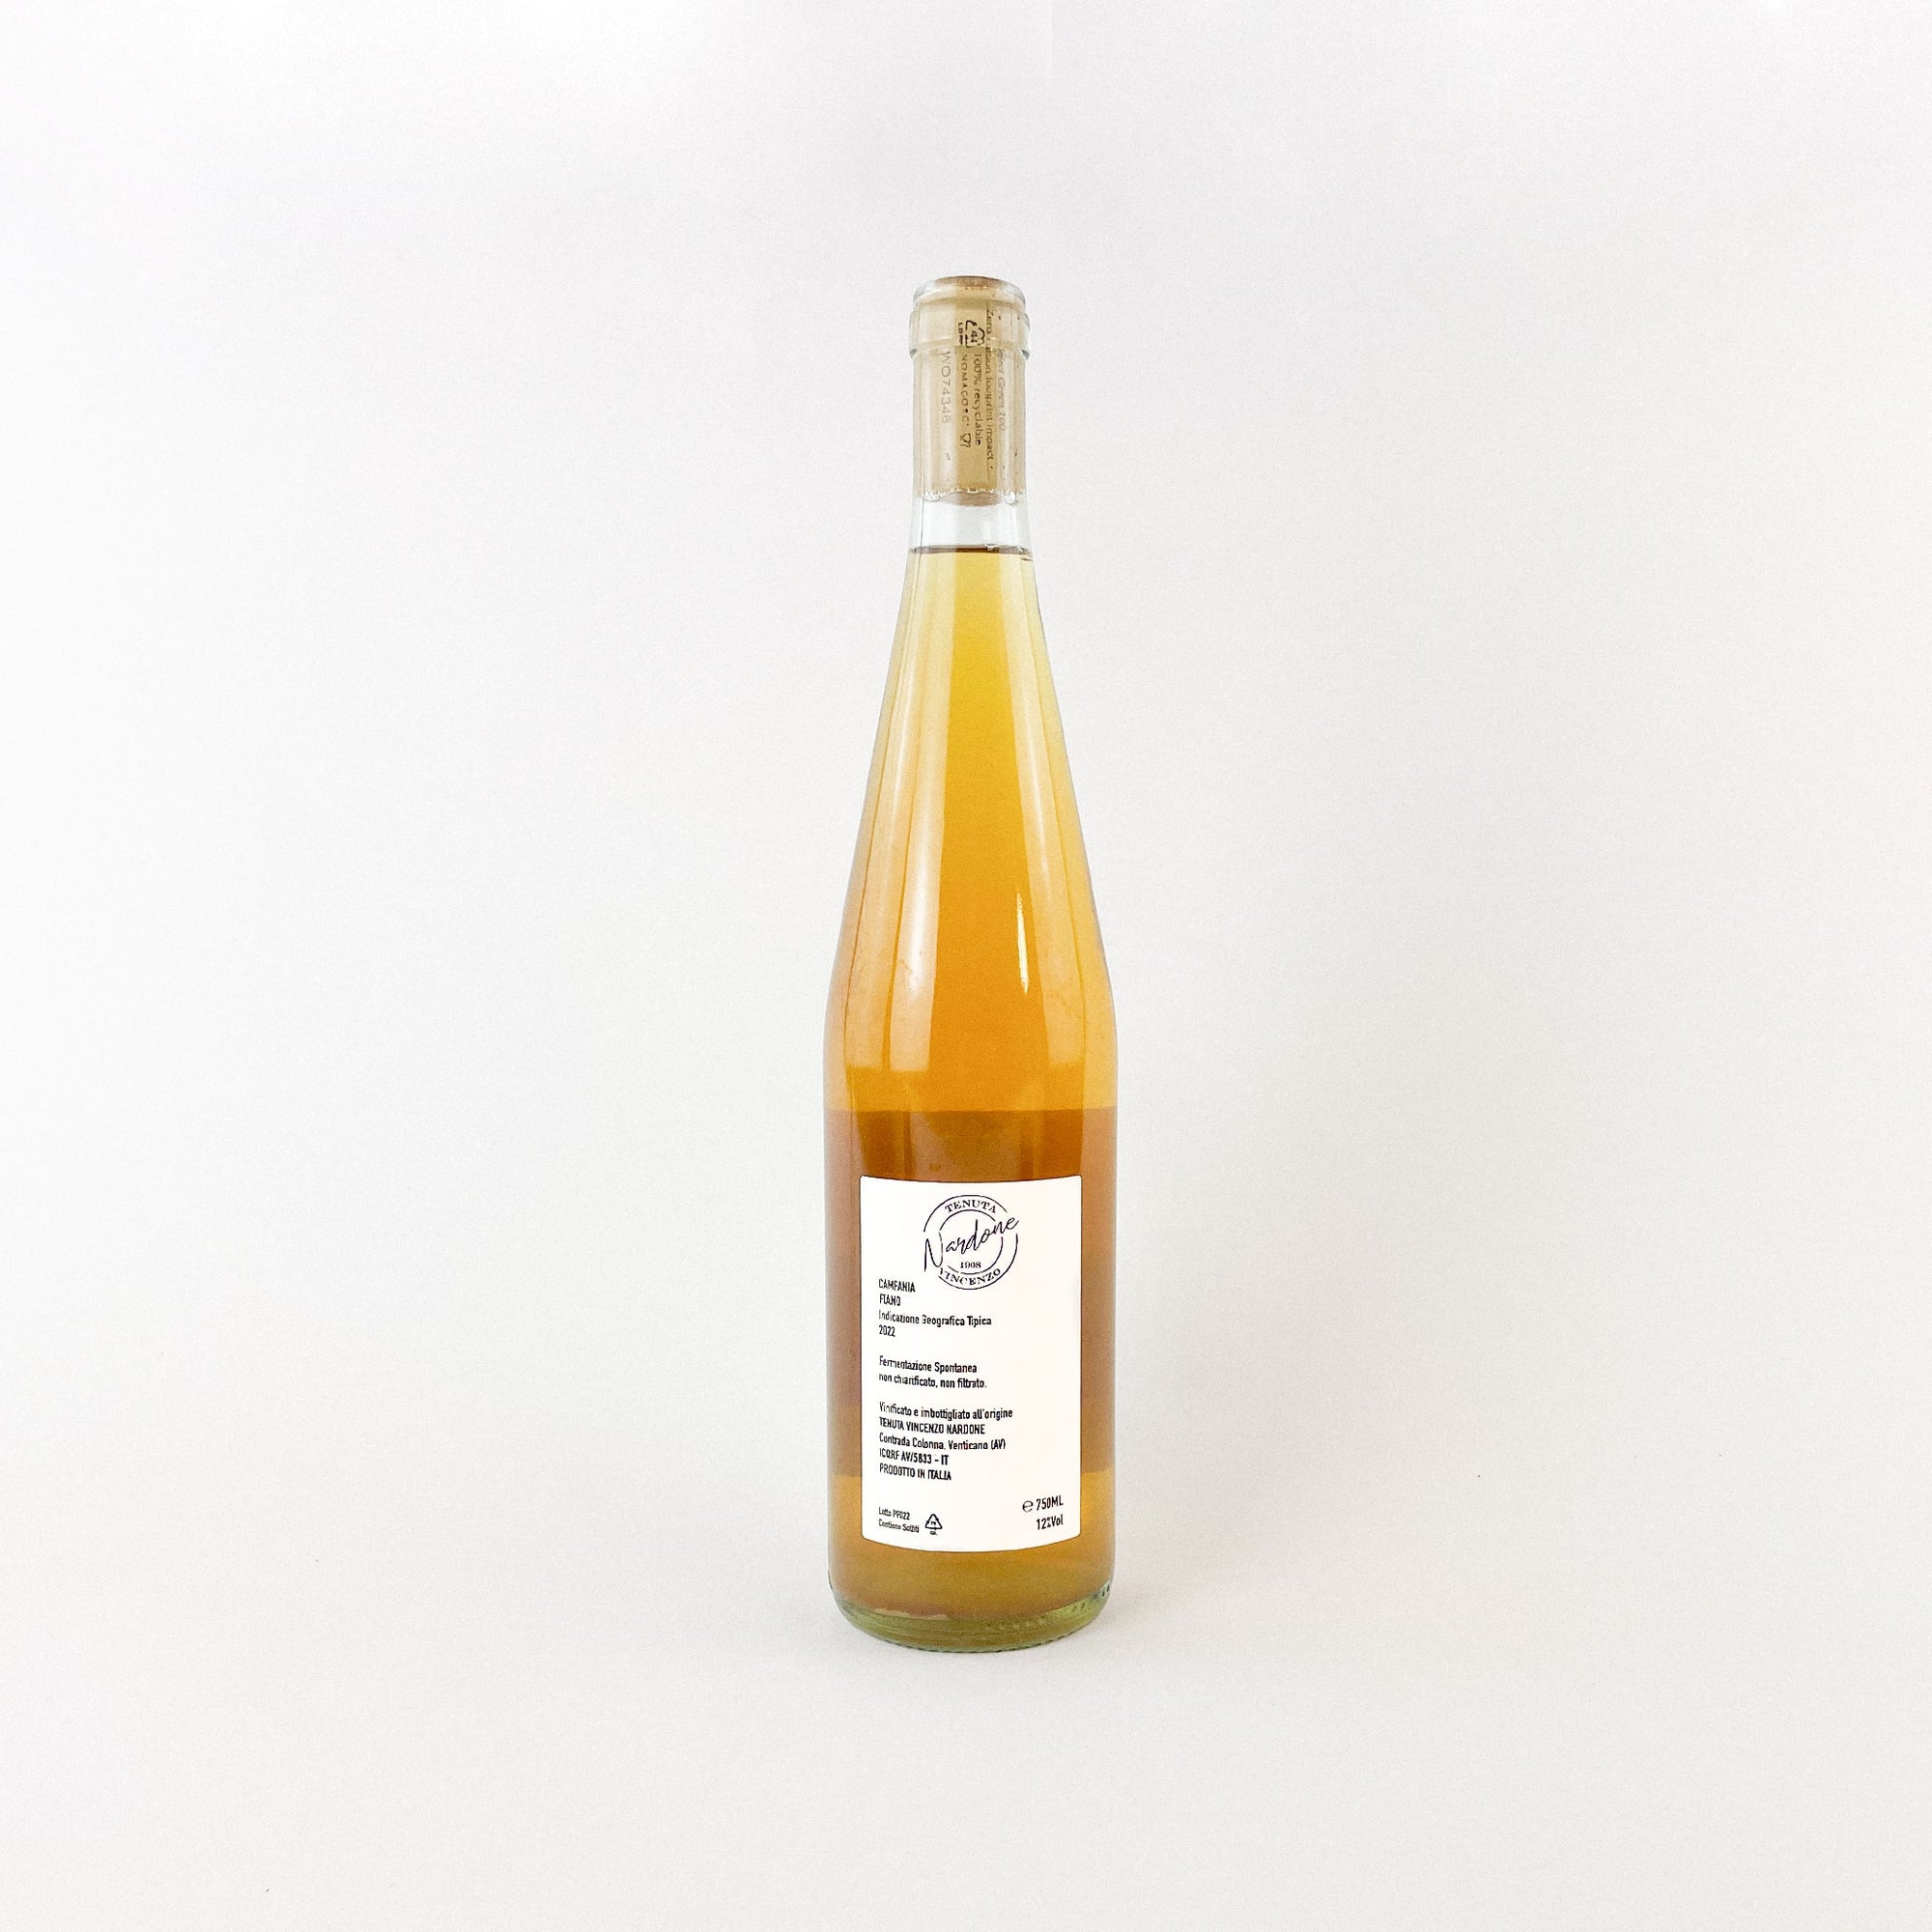 A bottle of orange natural wine from Italy, Pupo Zero Fiano by Tenuta Nardone Back View